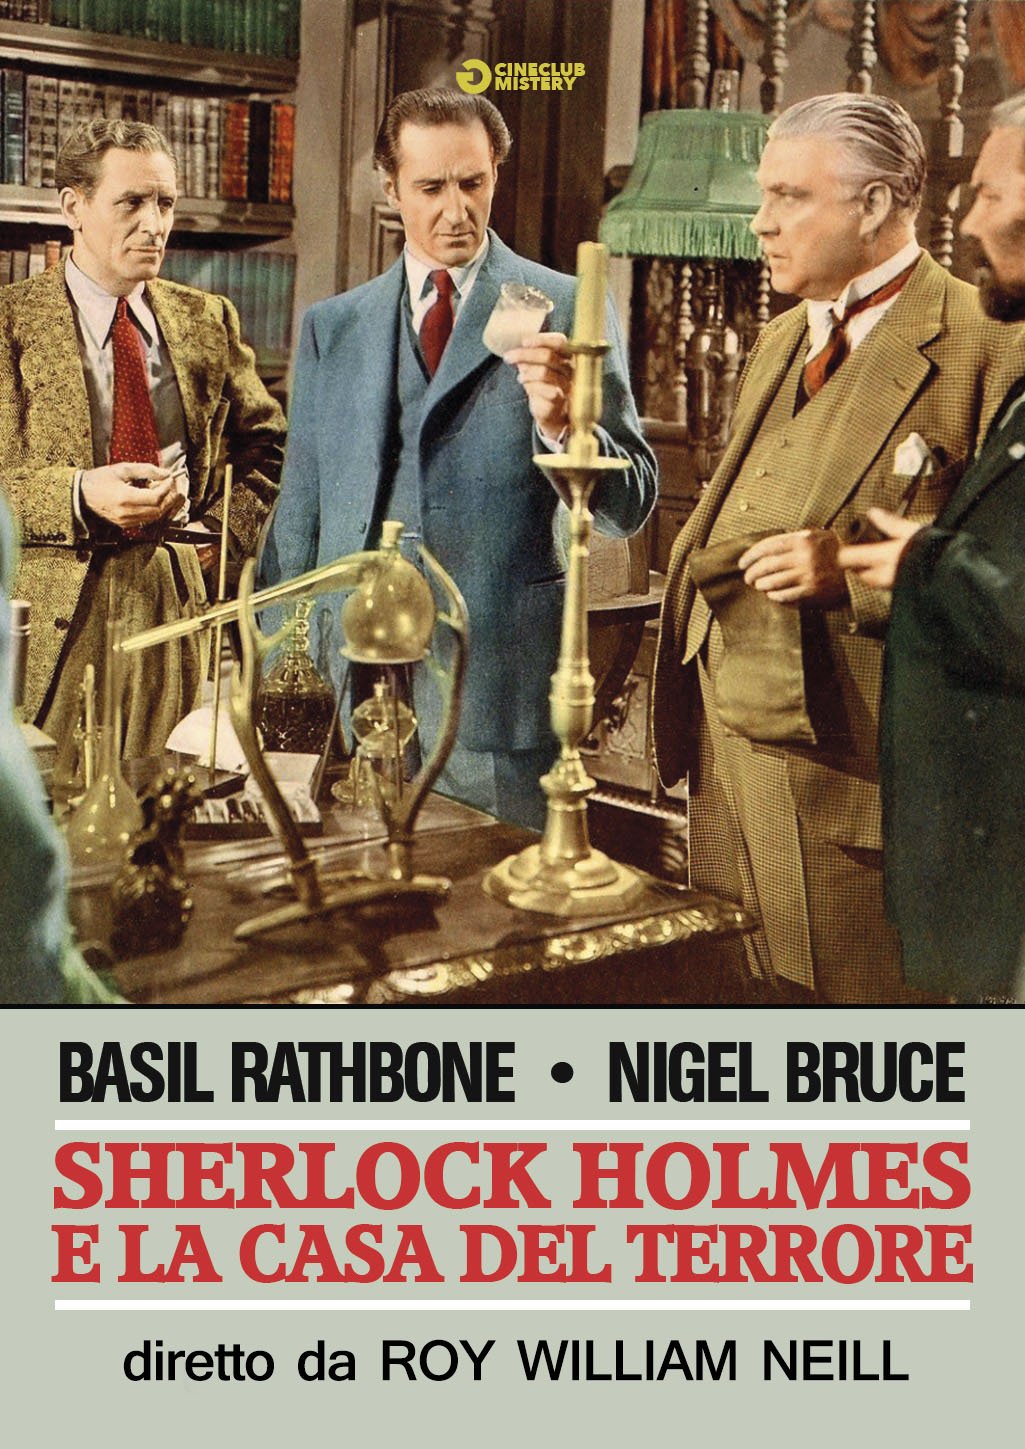 Sherlock Holmes e la casa del terrore [B/N] [HD] (1945)